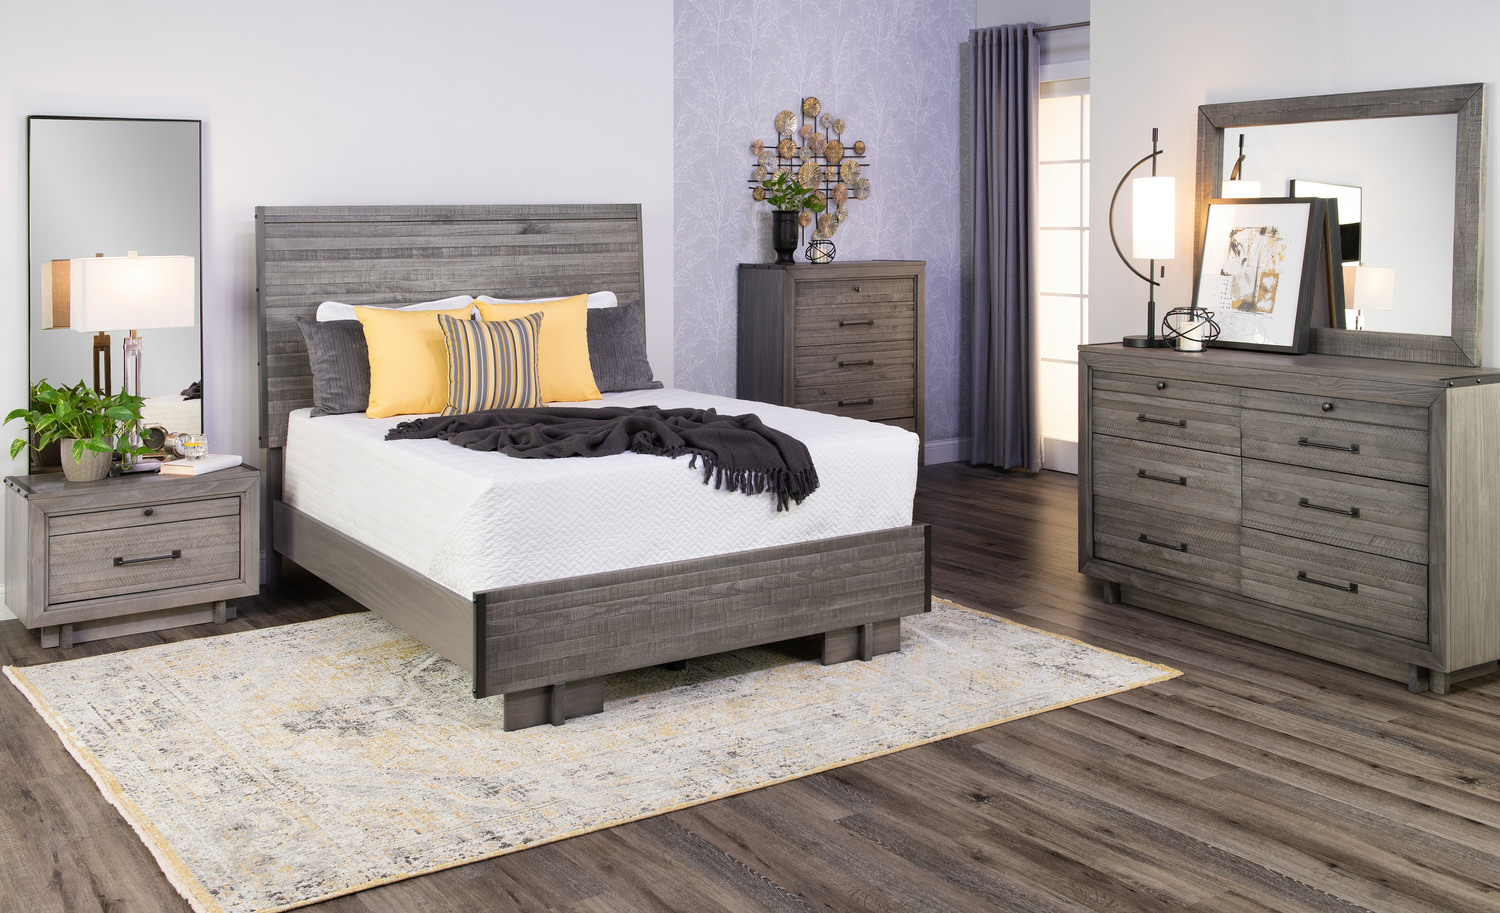 Find Bedroom Sets and Furnishings — HOM Furniture